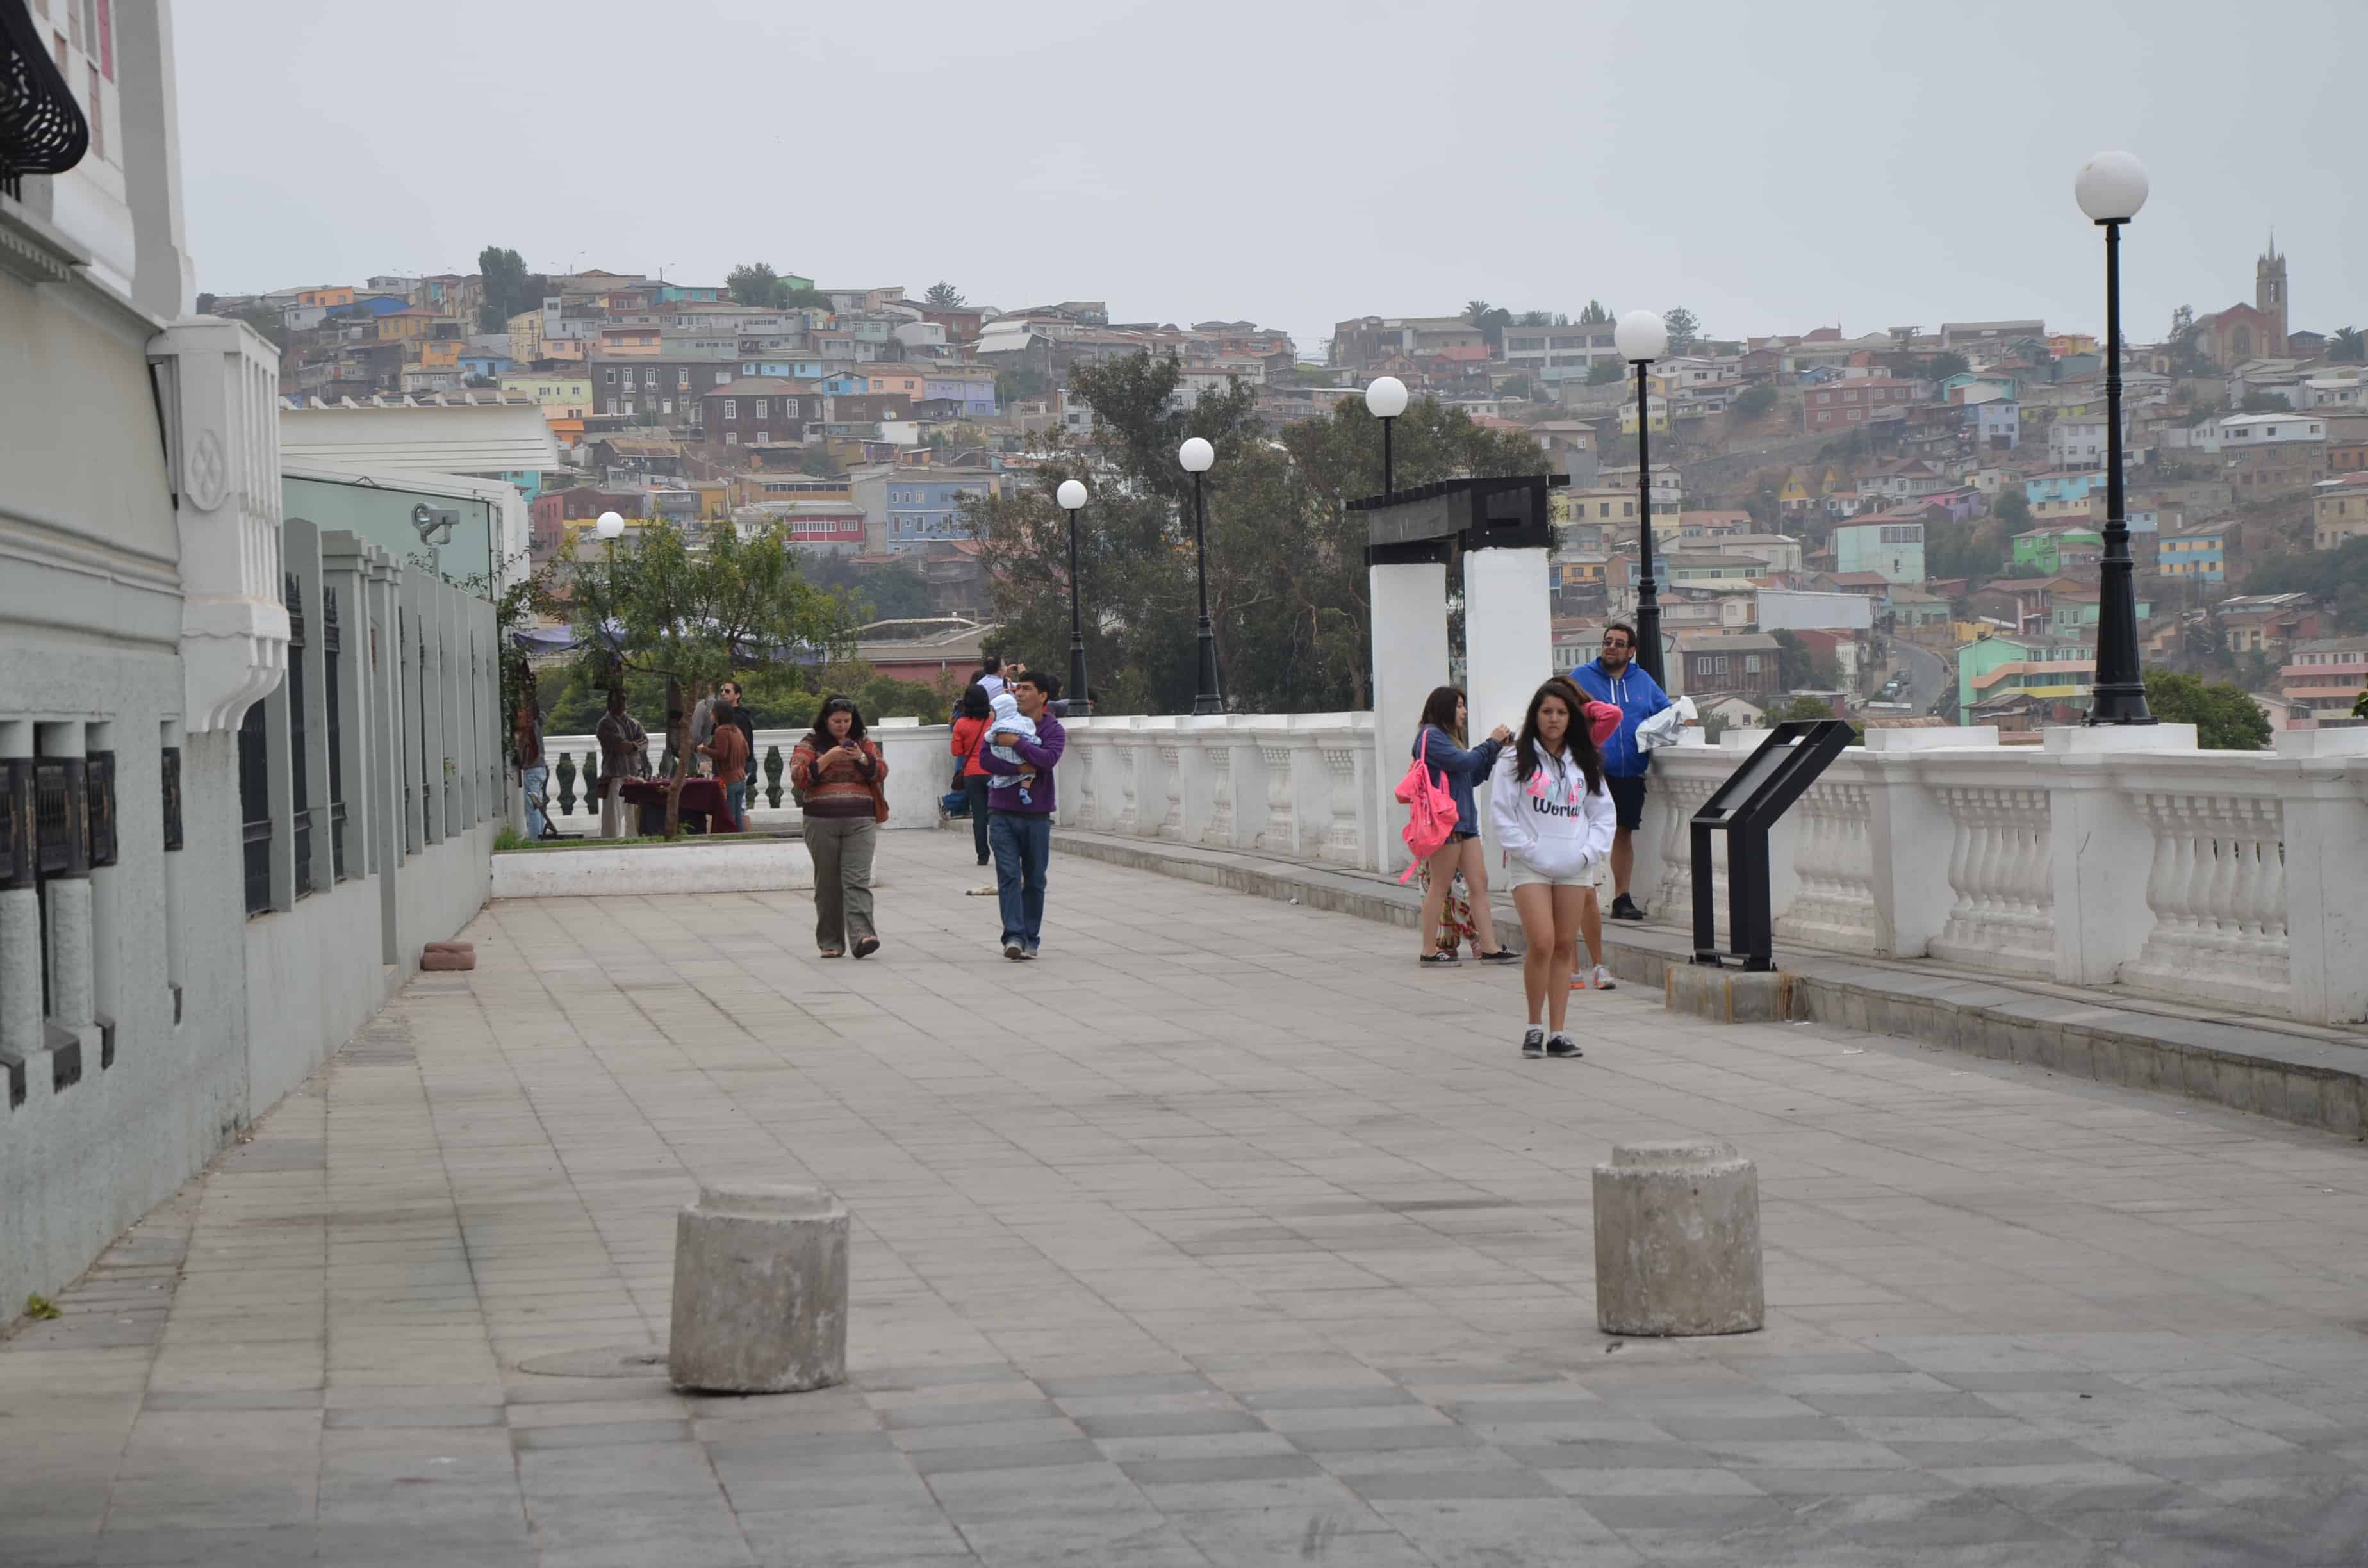 Paseo Yugoslavo in Valparaíso, Chile